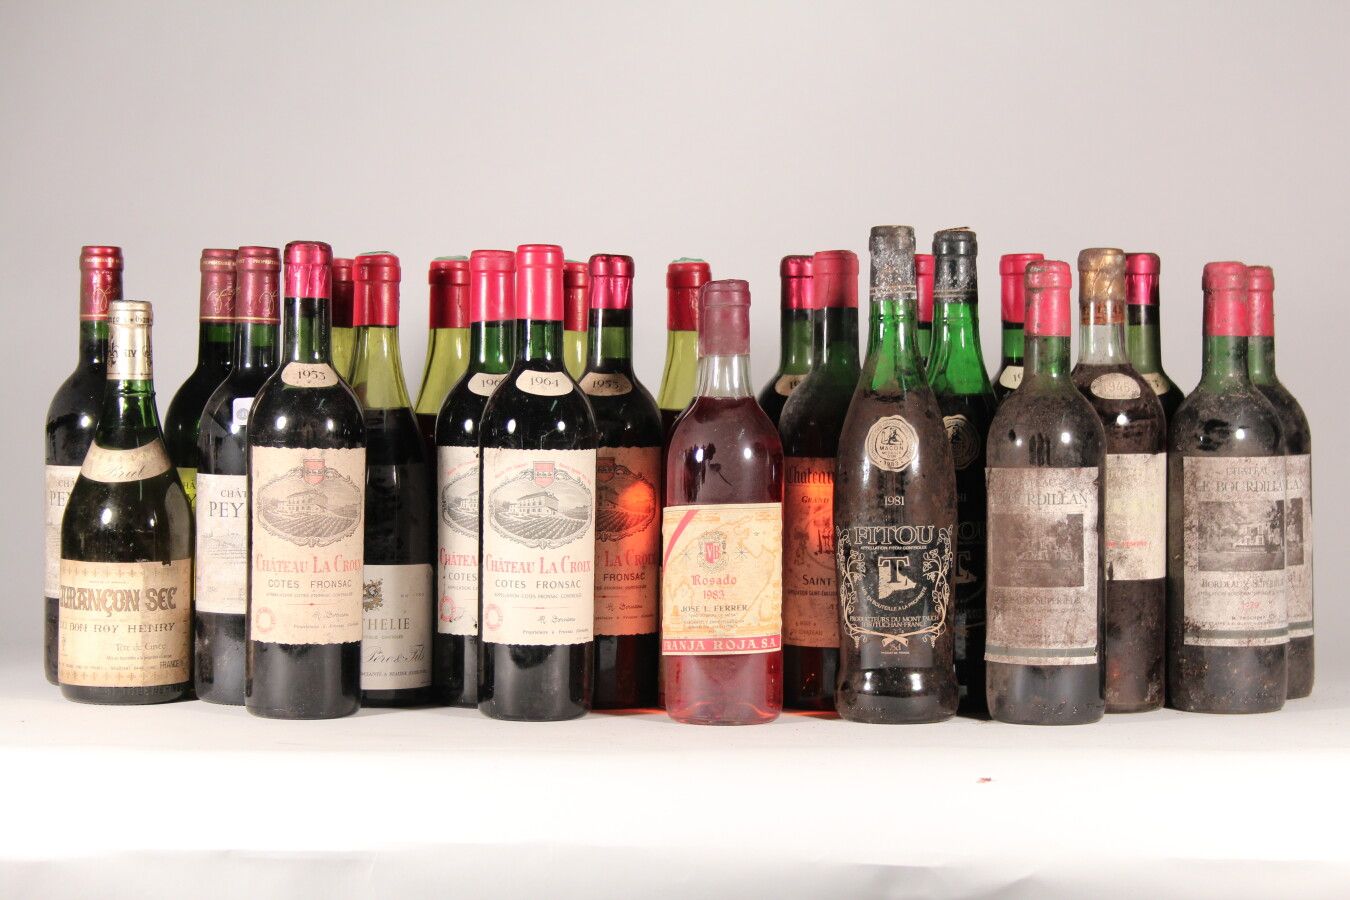 Null 1967年--蒙塞利

Chanson Pére & Fils - 5瓶

NC - 汝兰松干红 - 1瓶

1979年--勒布迪兰酒庄

Bx-Su&hellip;